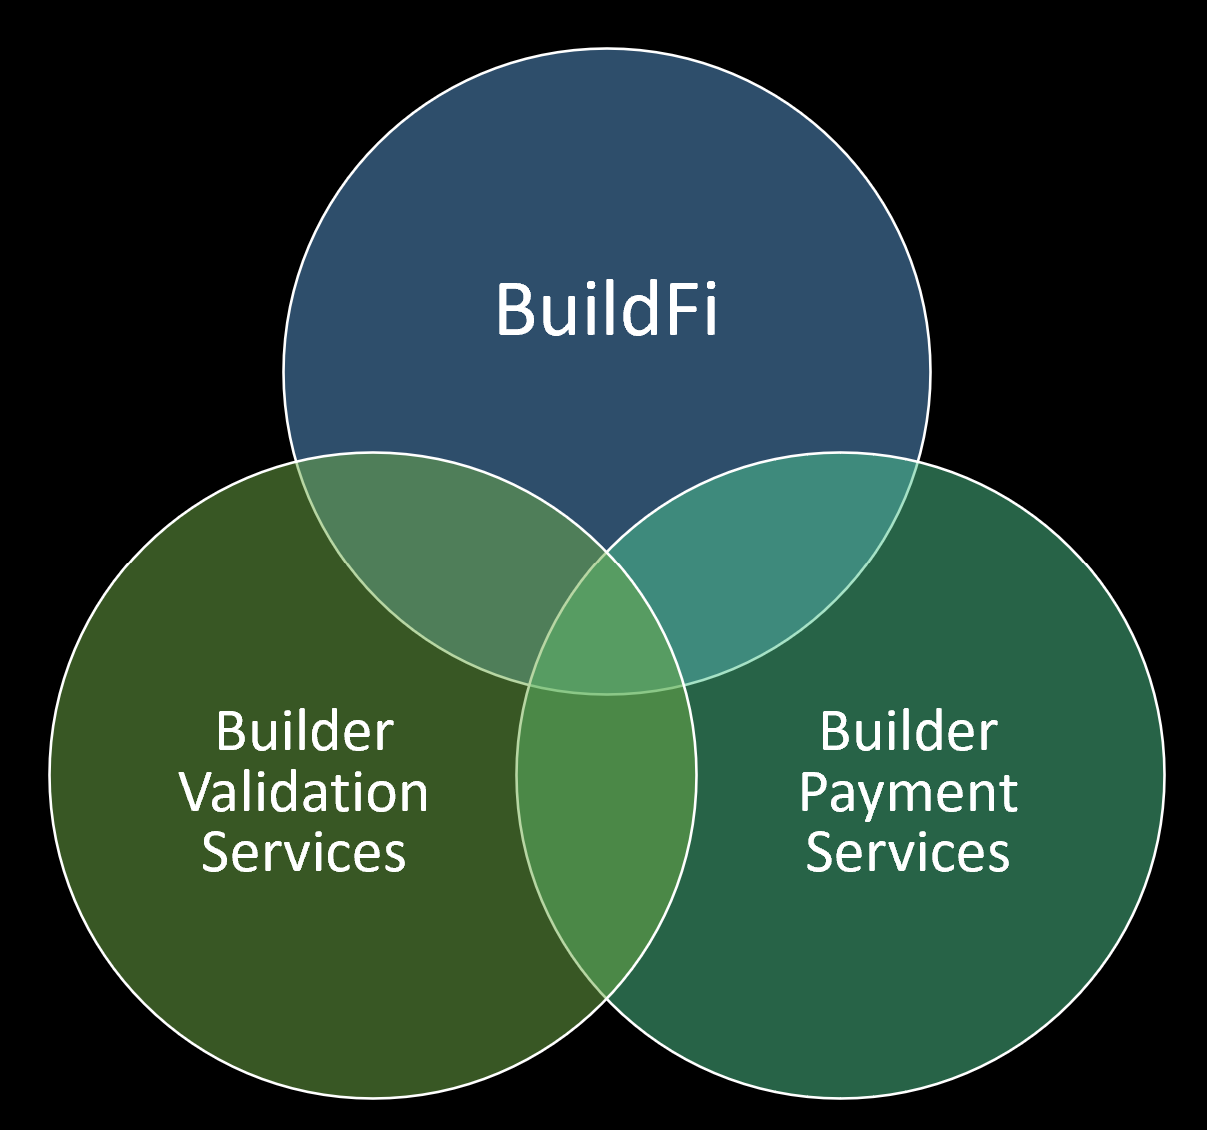 BuildFi-BuilderValidation-BuilderPay-venn-diagram